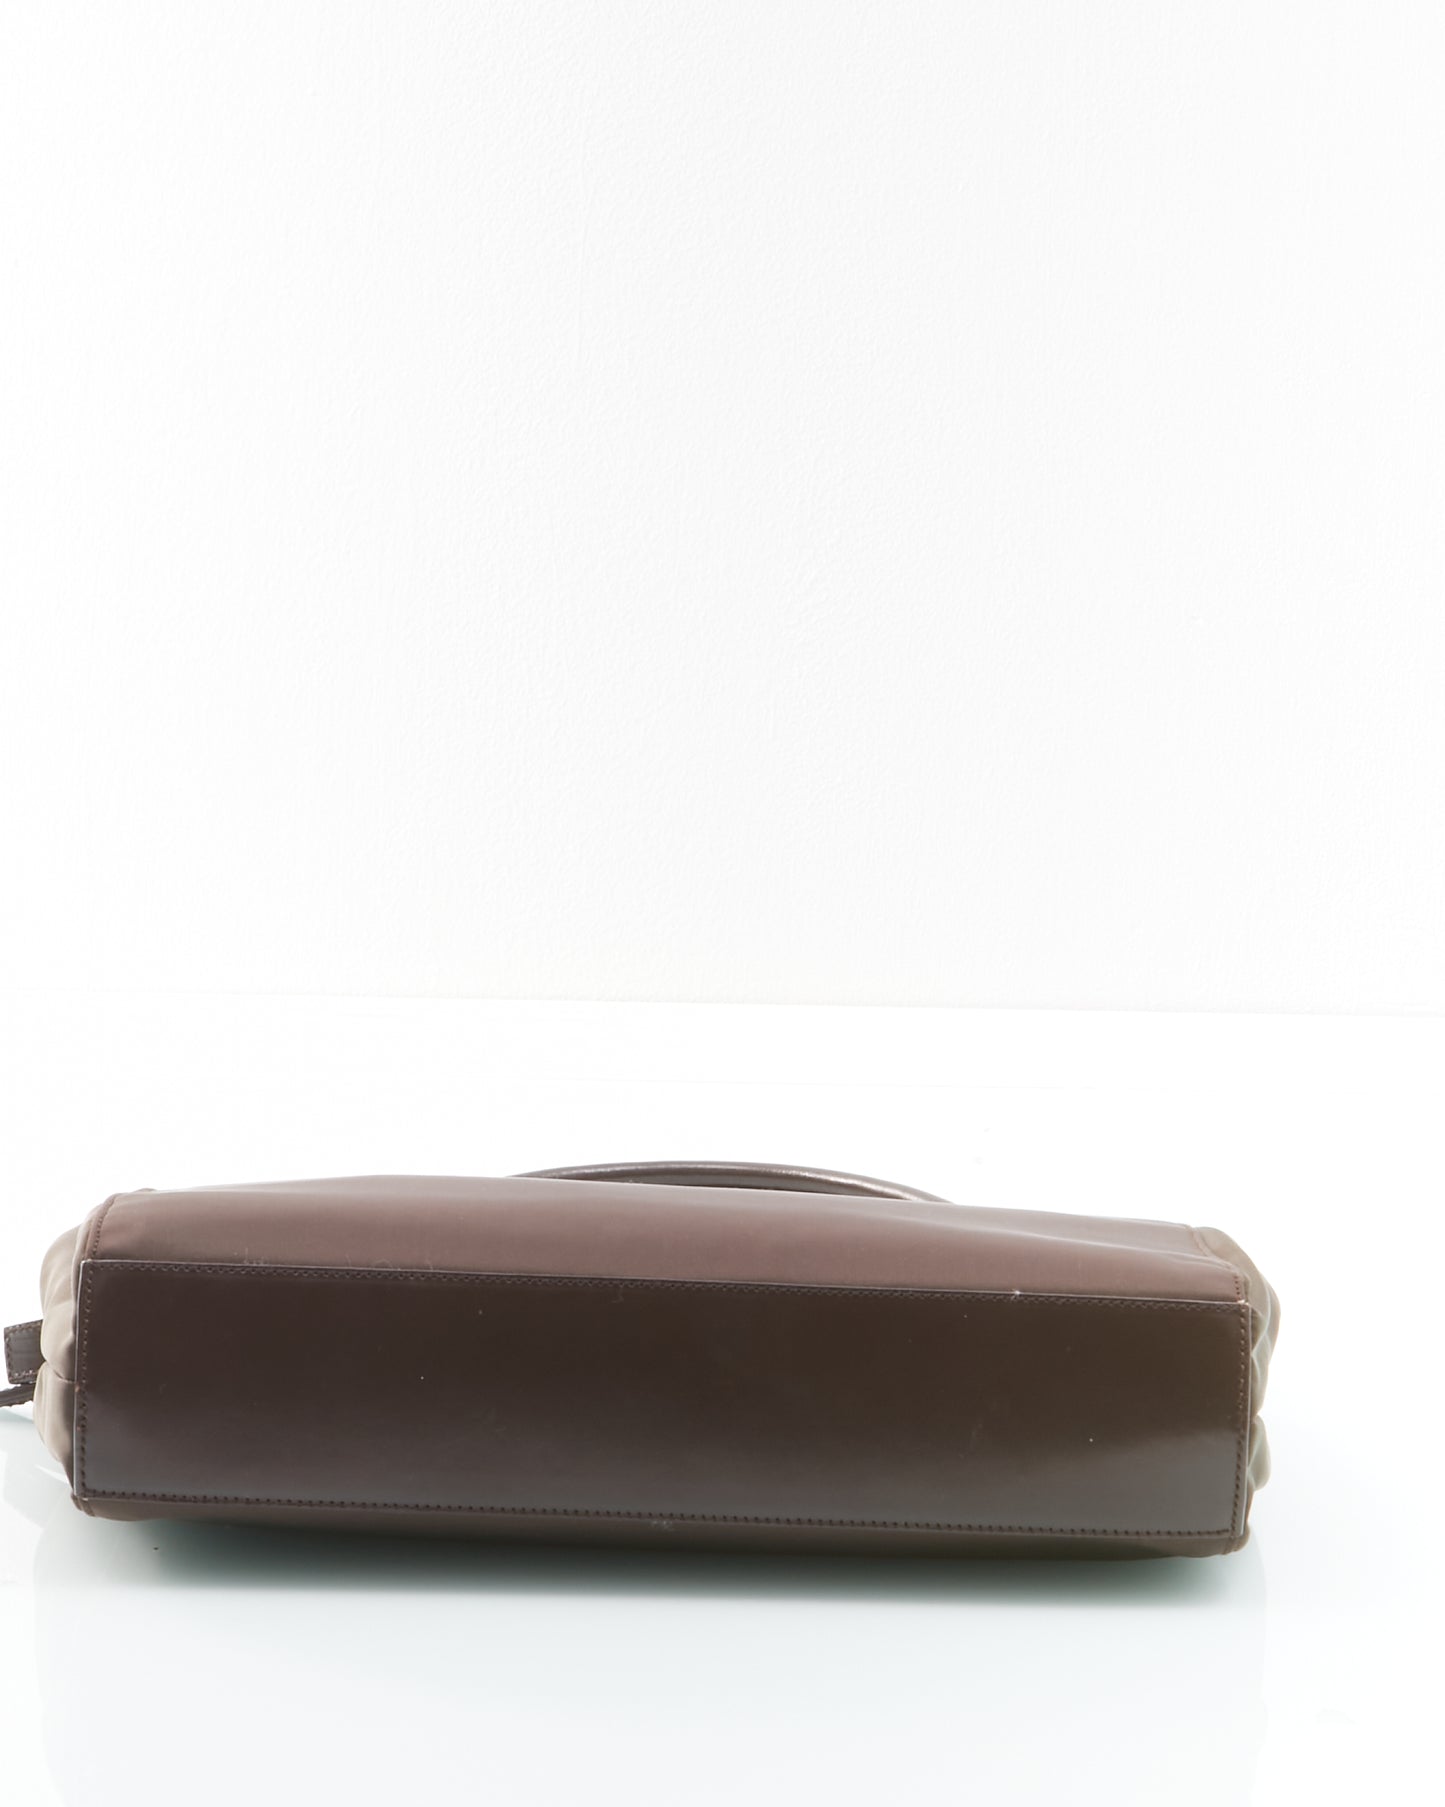 Prada Brown Tessuto Nylon Leather Handle Tote Handbag